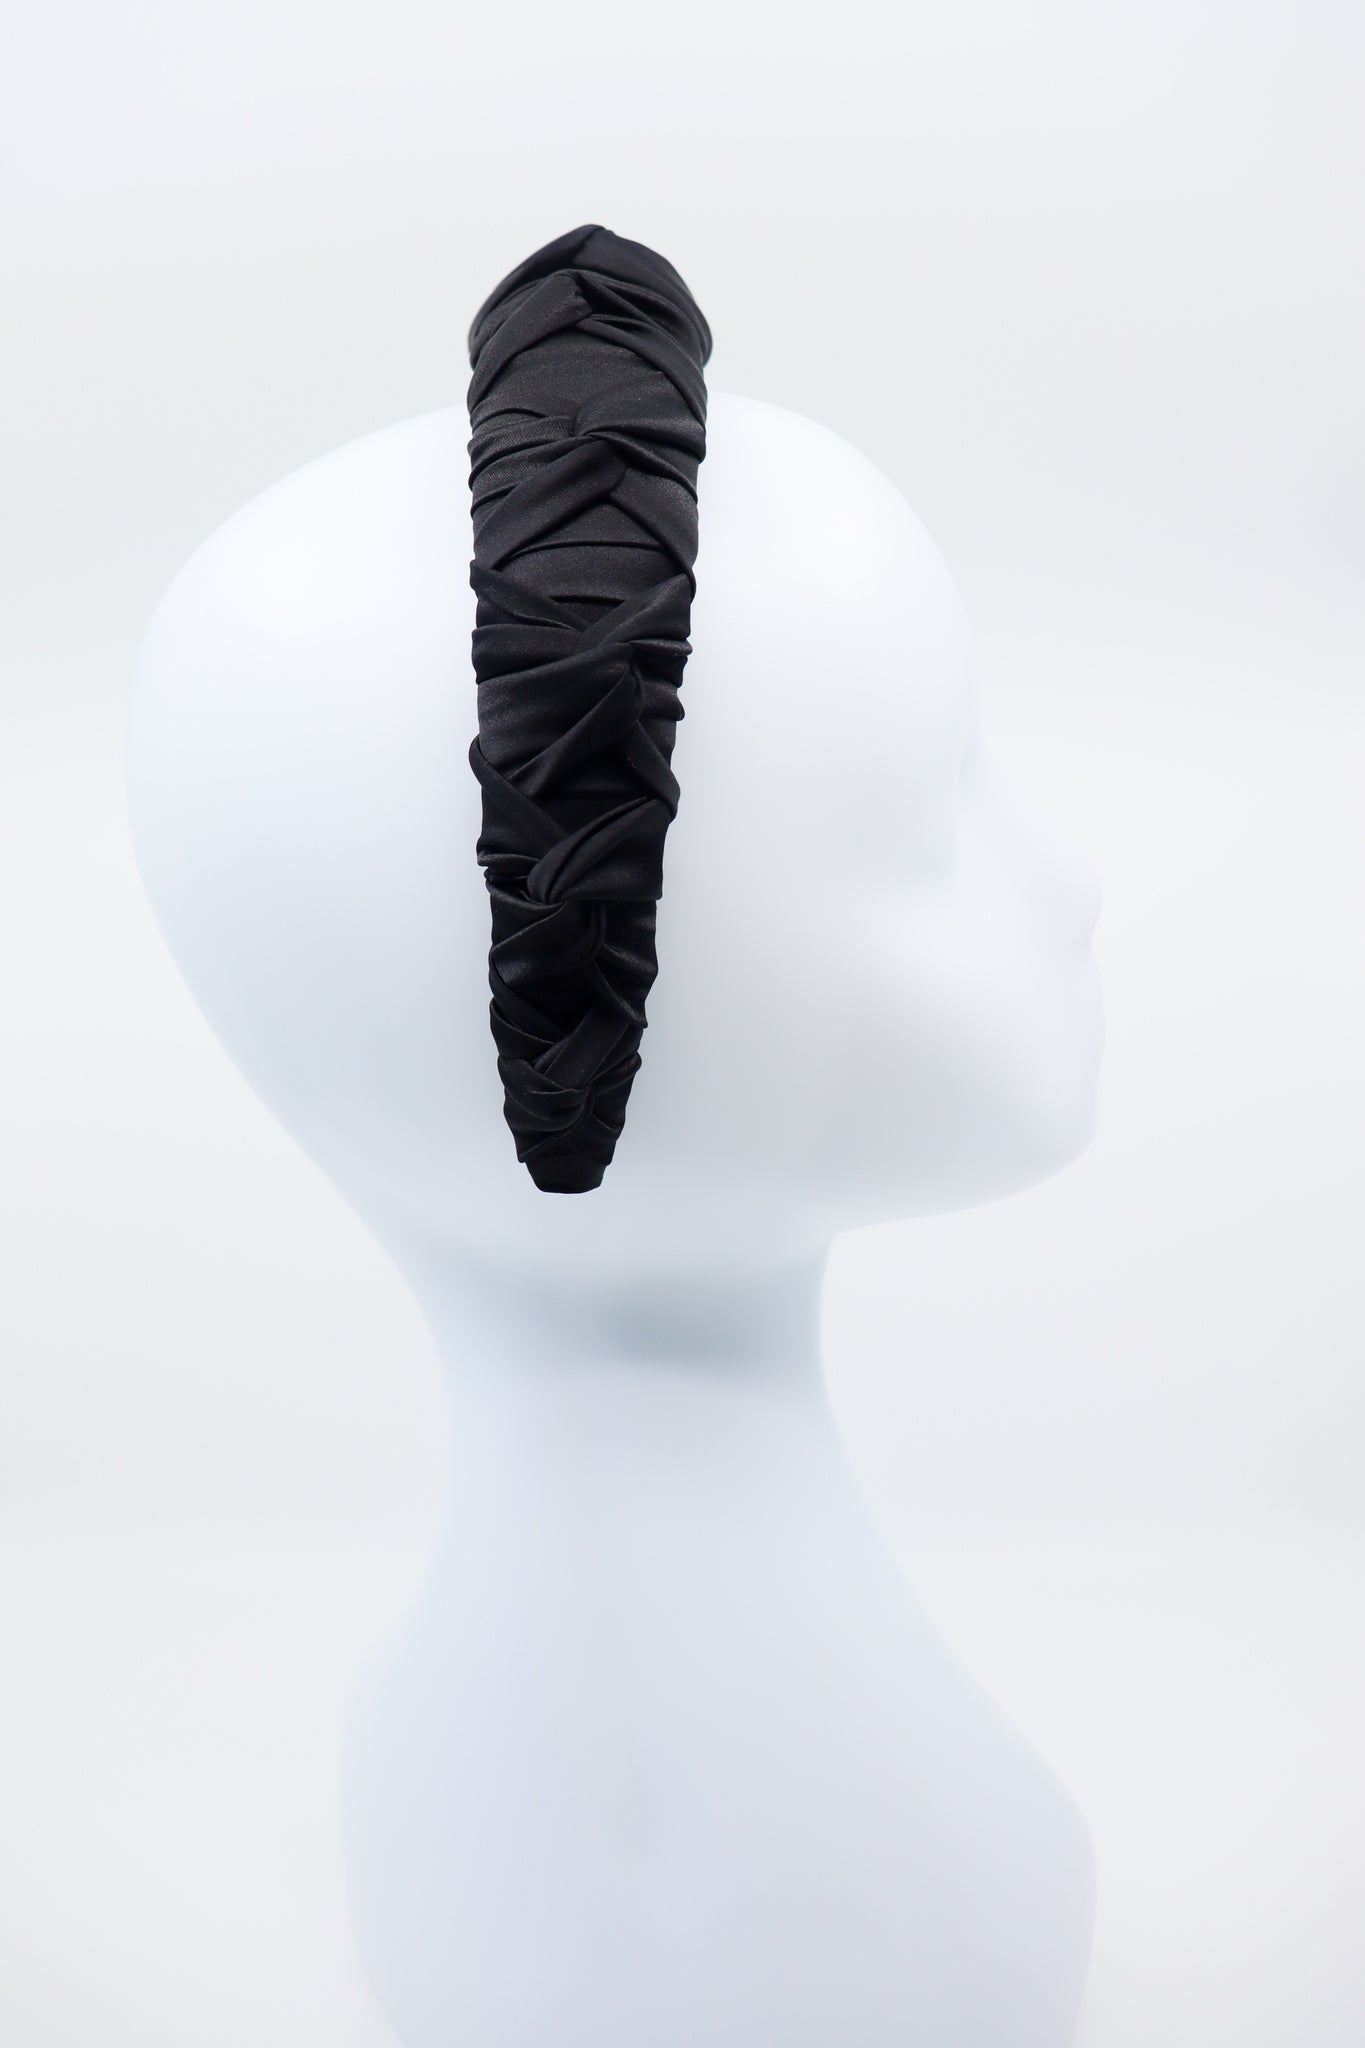 Joanna Knotted Headband Available Now